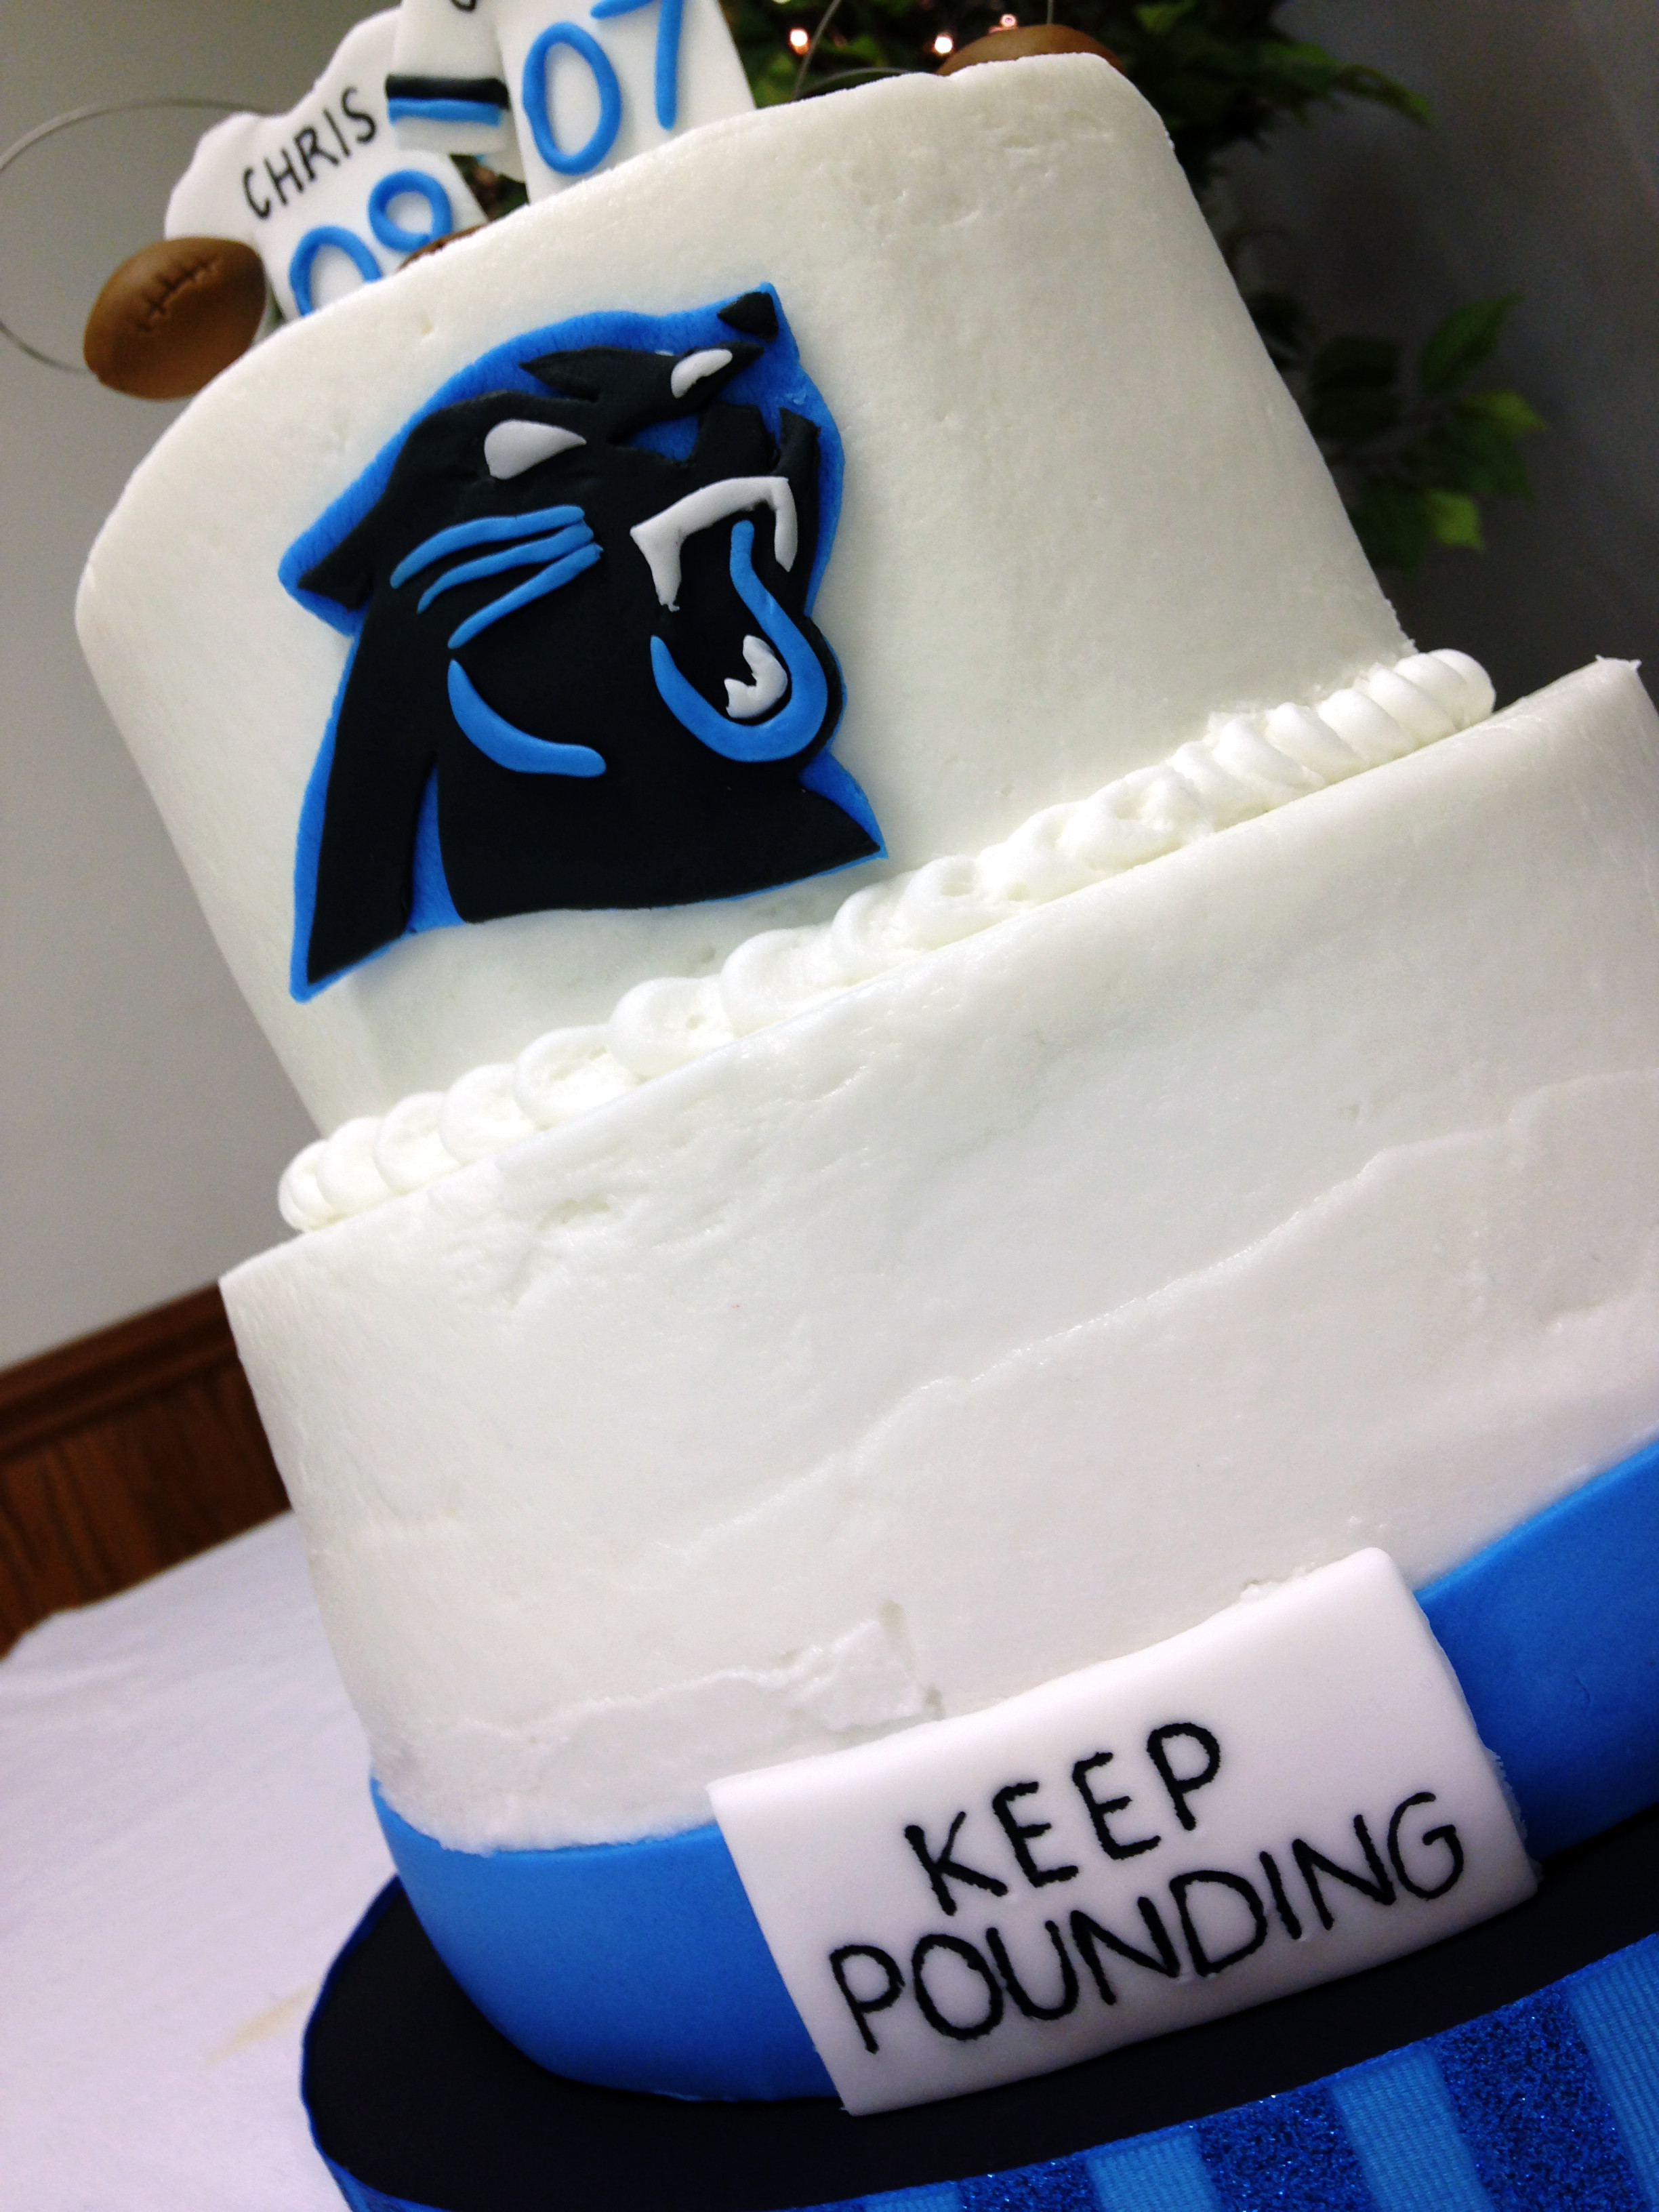 Best ideas about Carolina Panther Birthday Cake
. Save or Pin Carolina Panthers Cake Now.